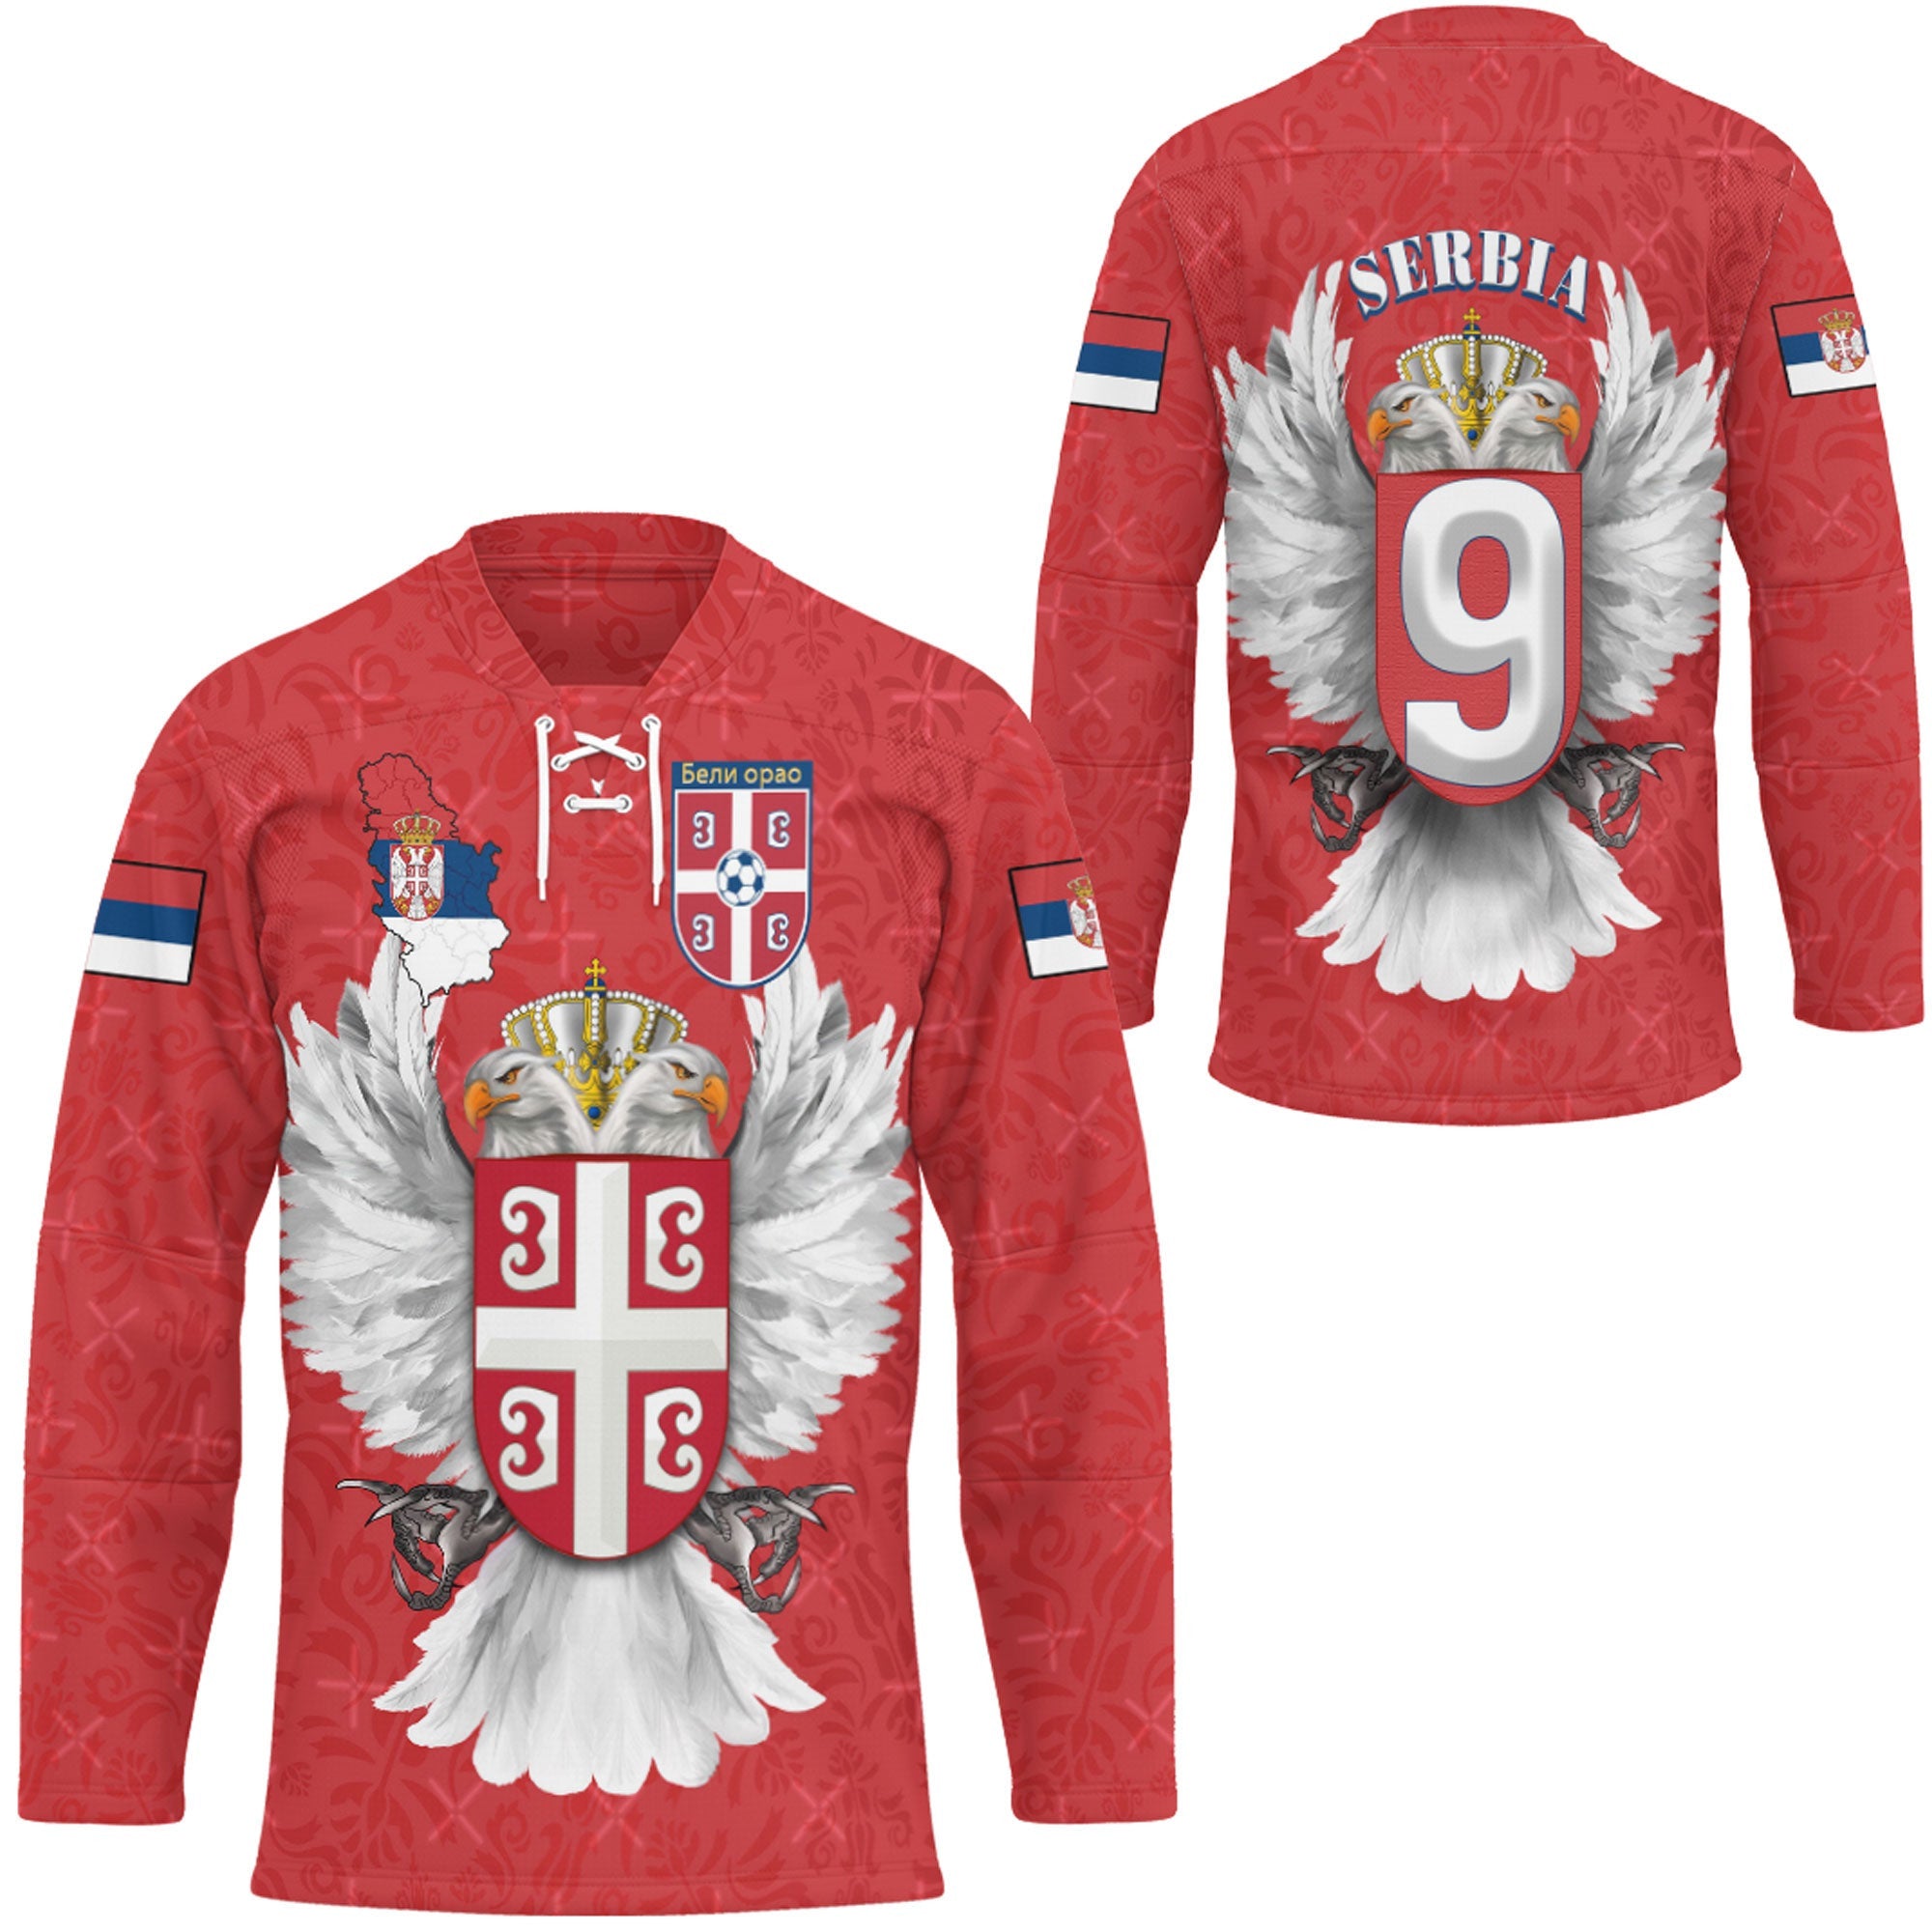 serbia-sport-symbol-style-hockey-jersey